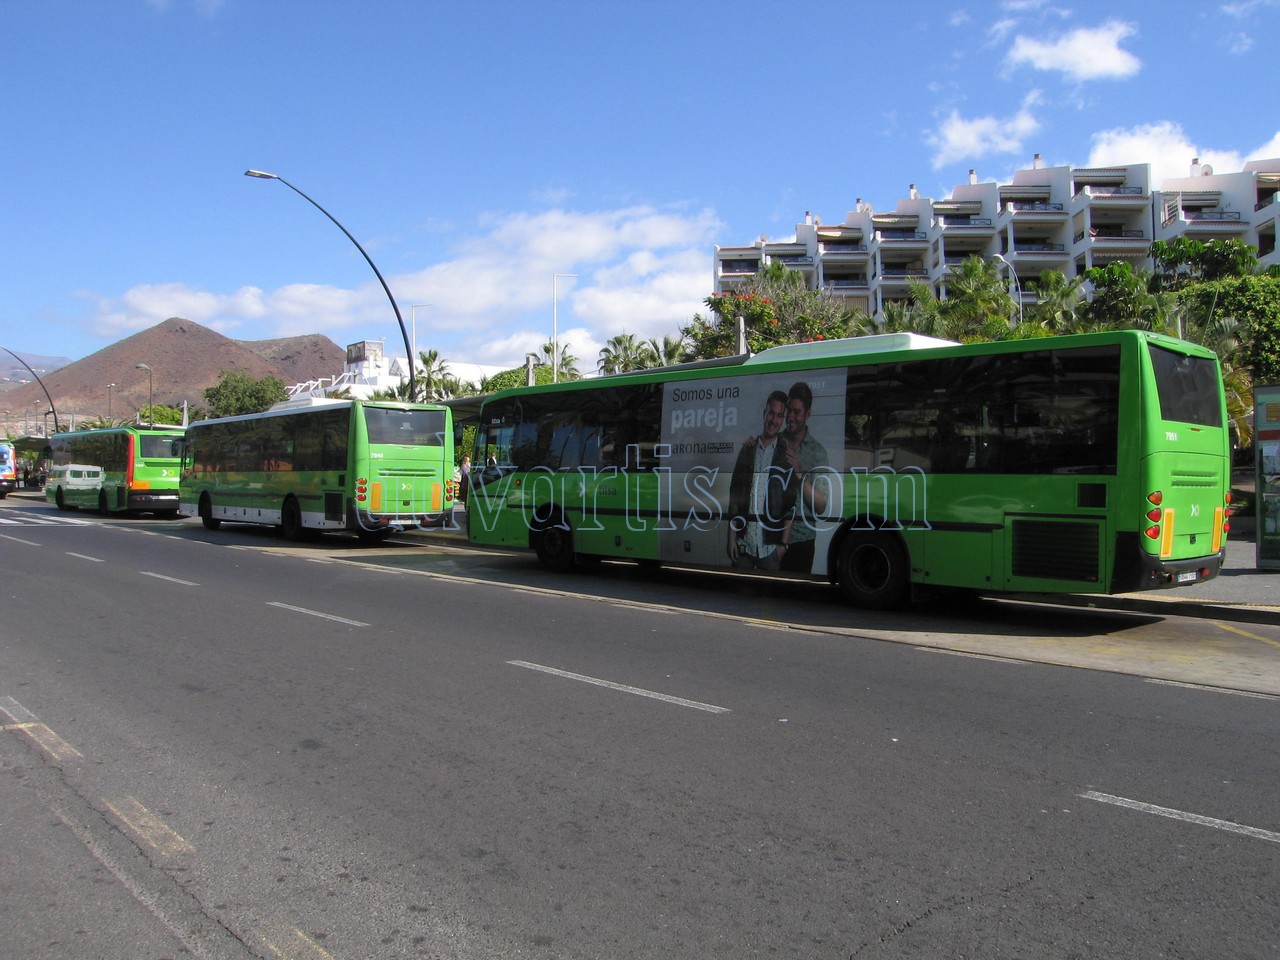 Tenerife bus in Los Cristianos bus station